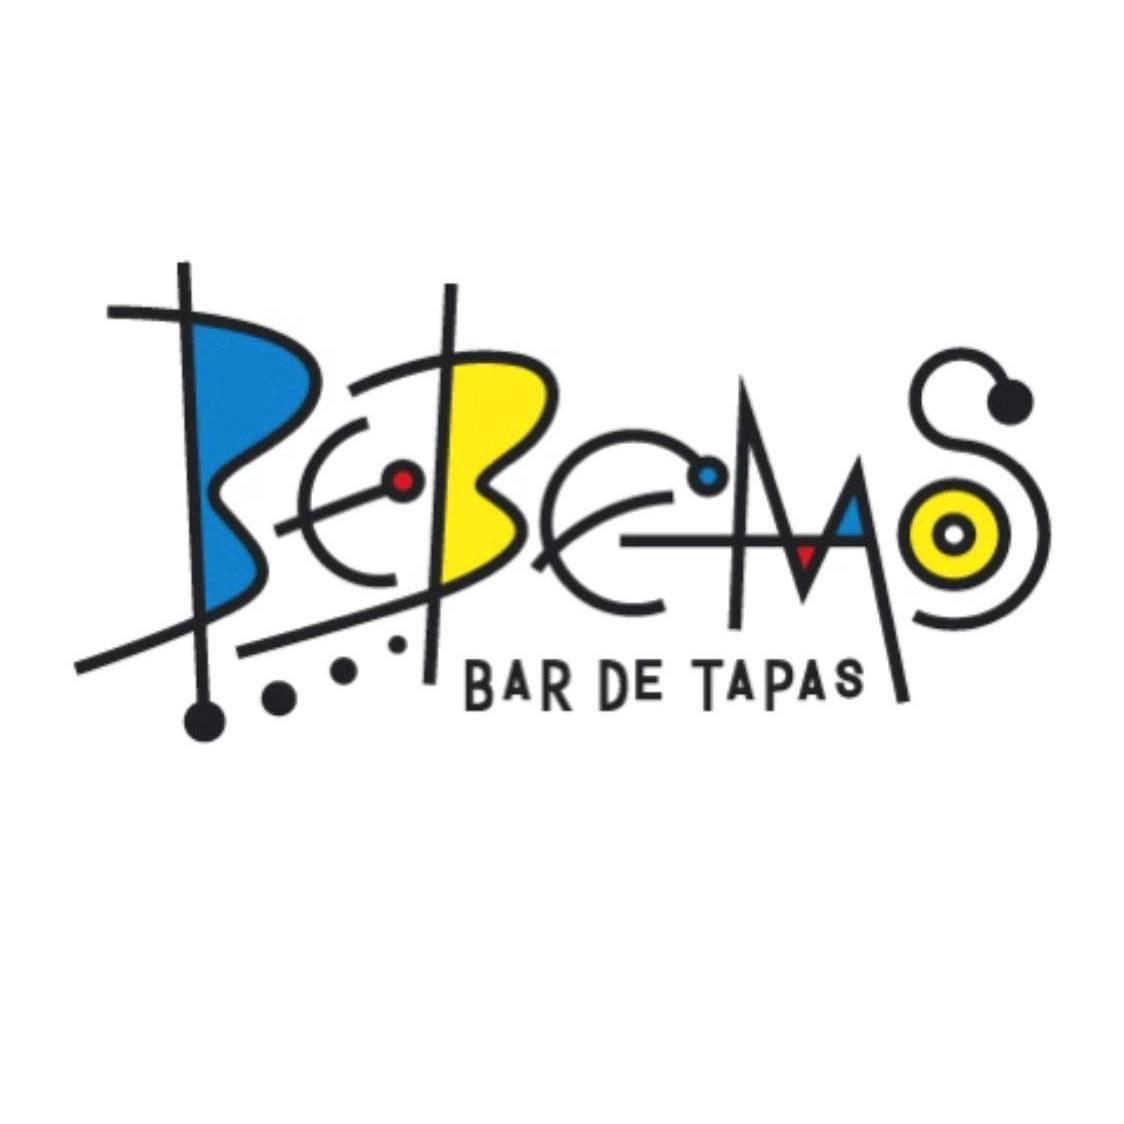 Paella Saturdays at Bebemos